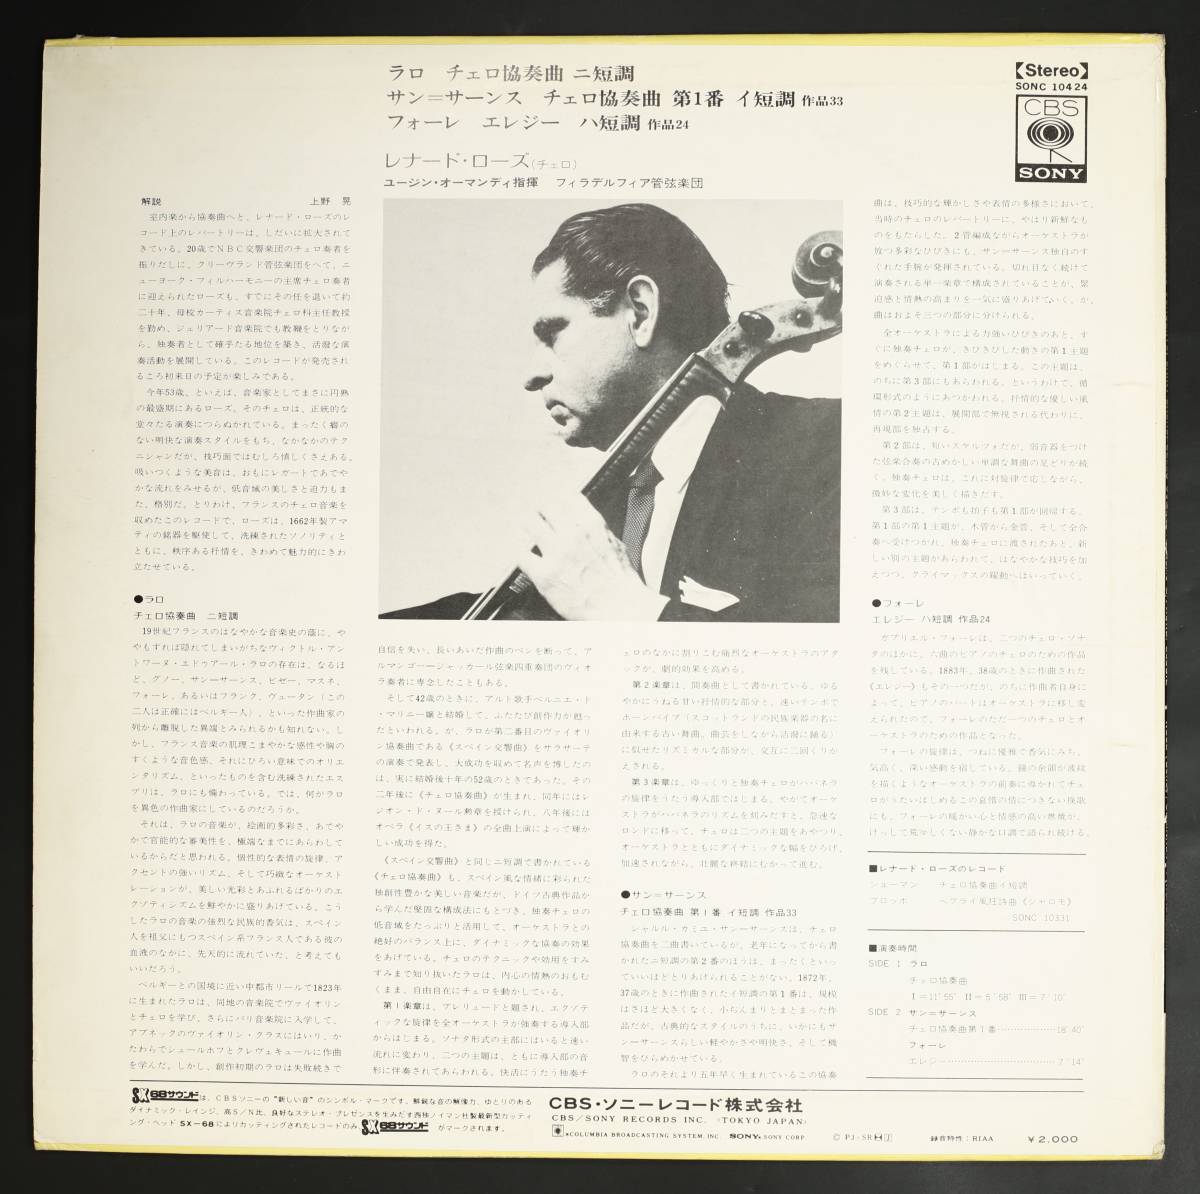 [ domestic record LP] Leonard * rose,o- man ti, filler Delphi e a tube /laro: contrabass concerto ( staple product, record good,Leonard Rose,Eugene Ormandy)